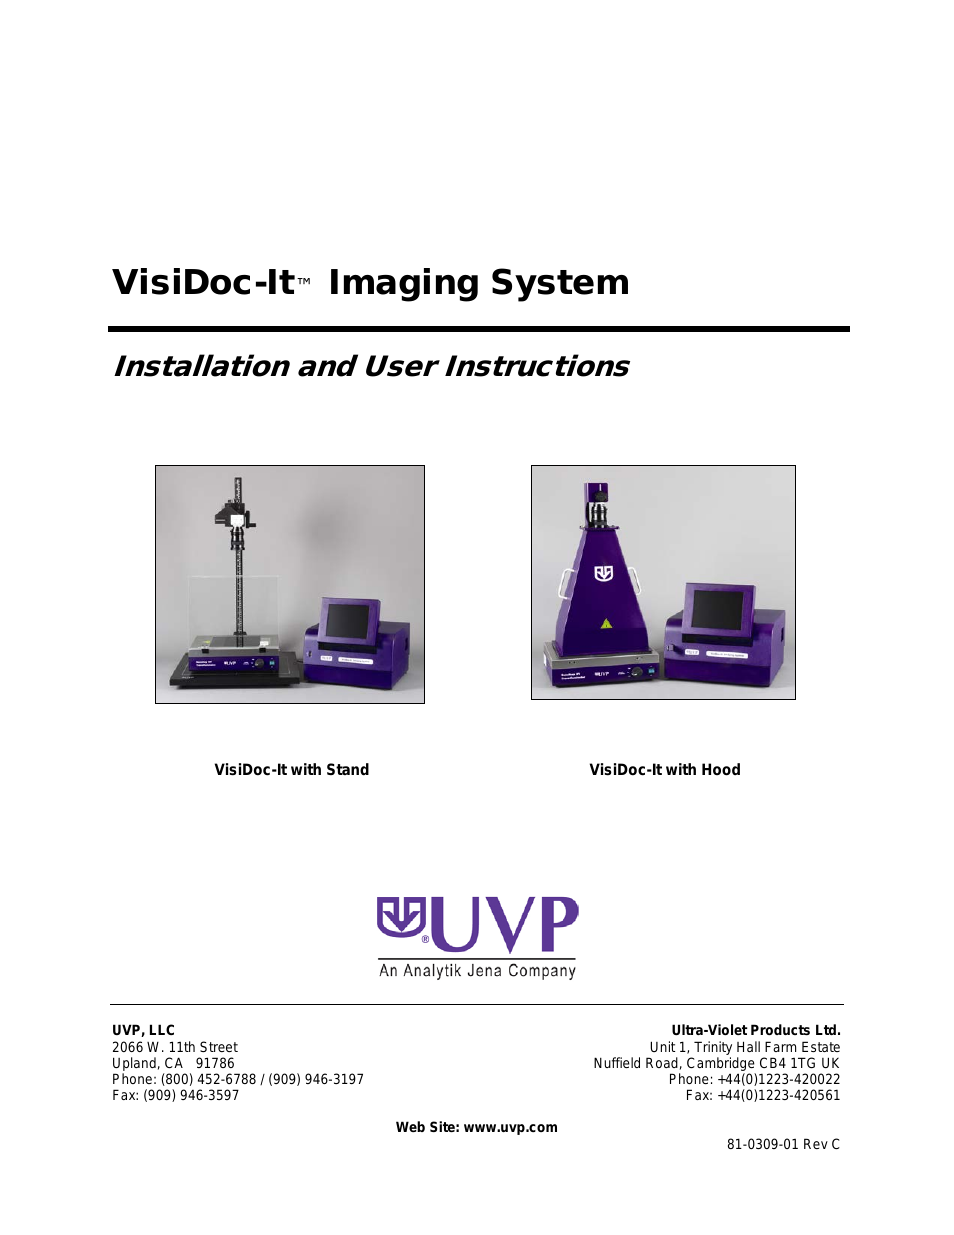 VisiDoc-It Imaging System